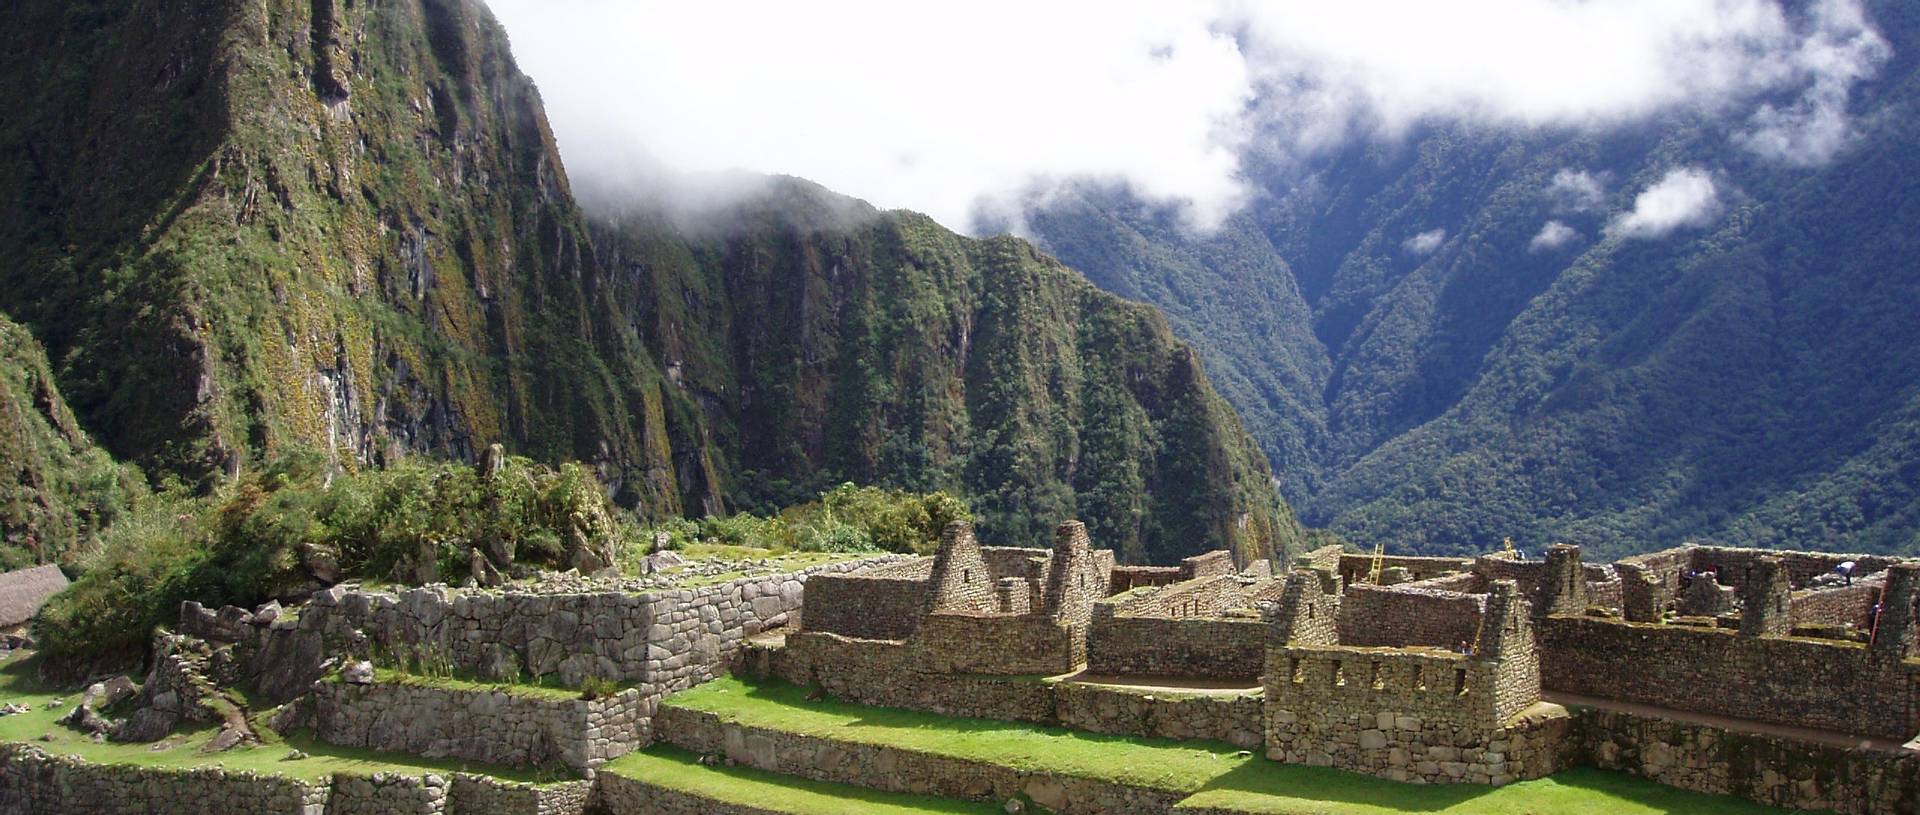 Terraces Of Machu Picchu, Clouds Lifting